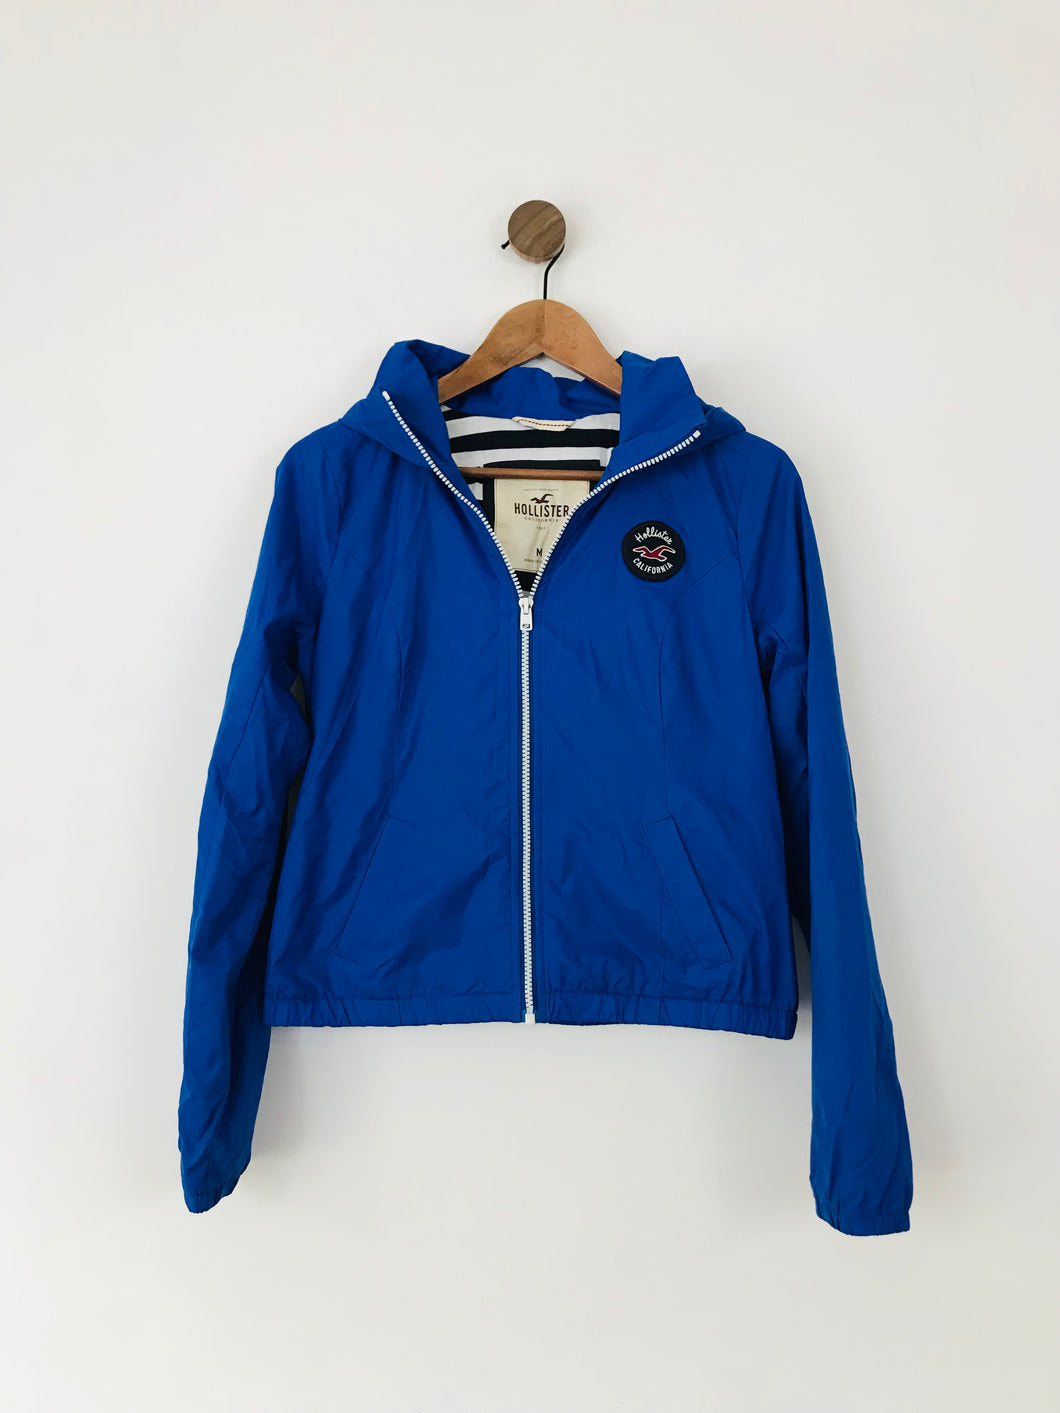 Hollister Women's Raincoat Jacket | M UK10-12 | Blue